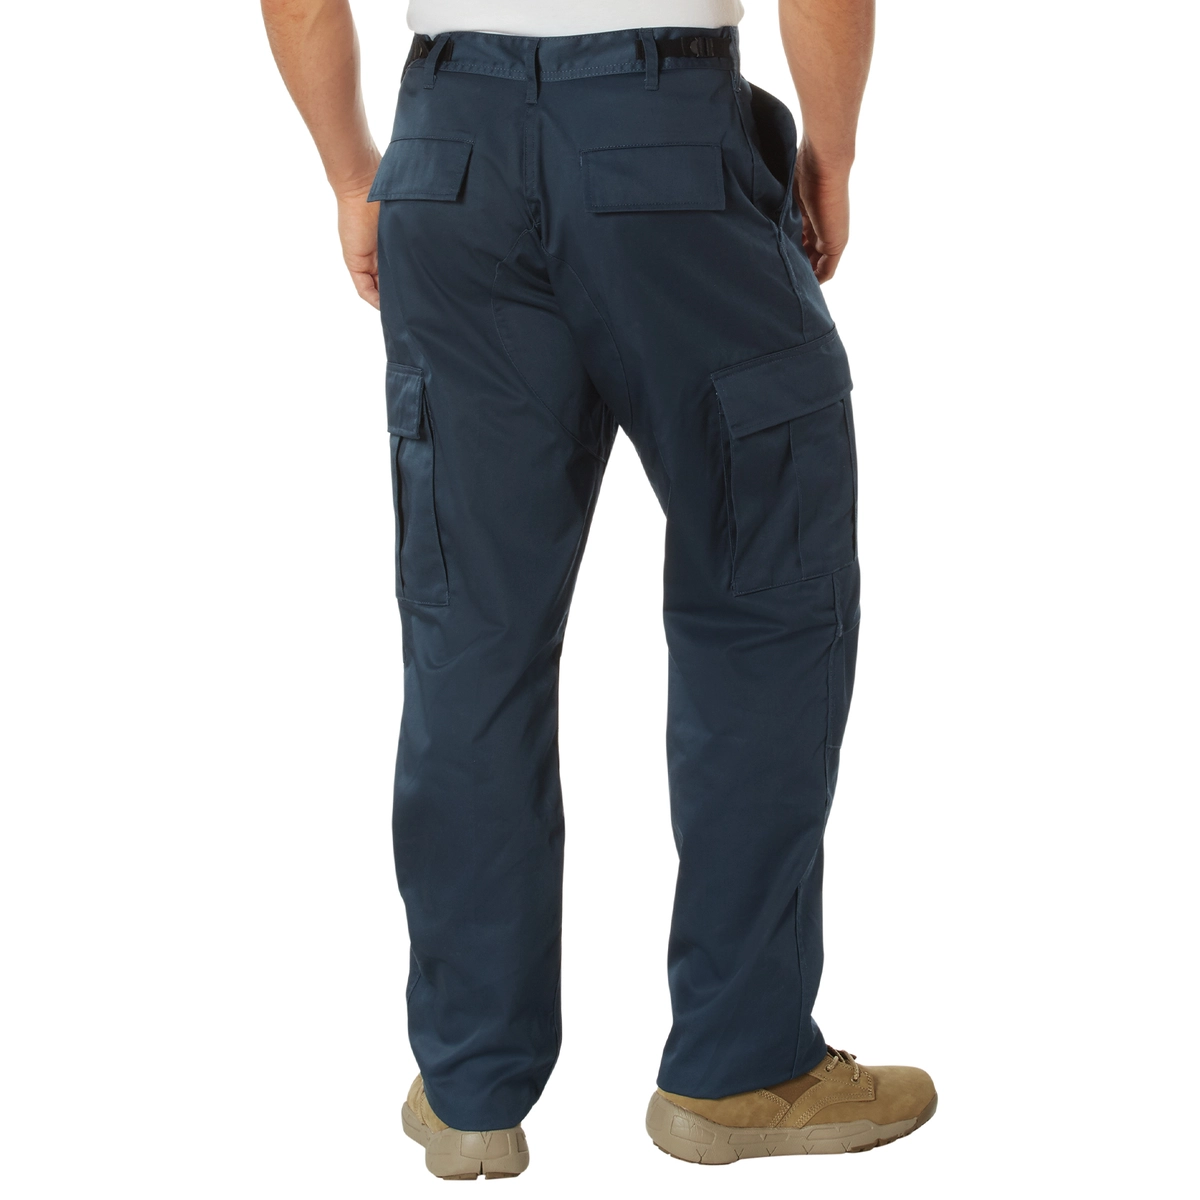 New cadet blue color cargo pants